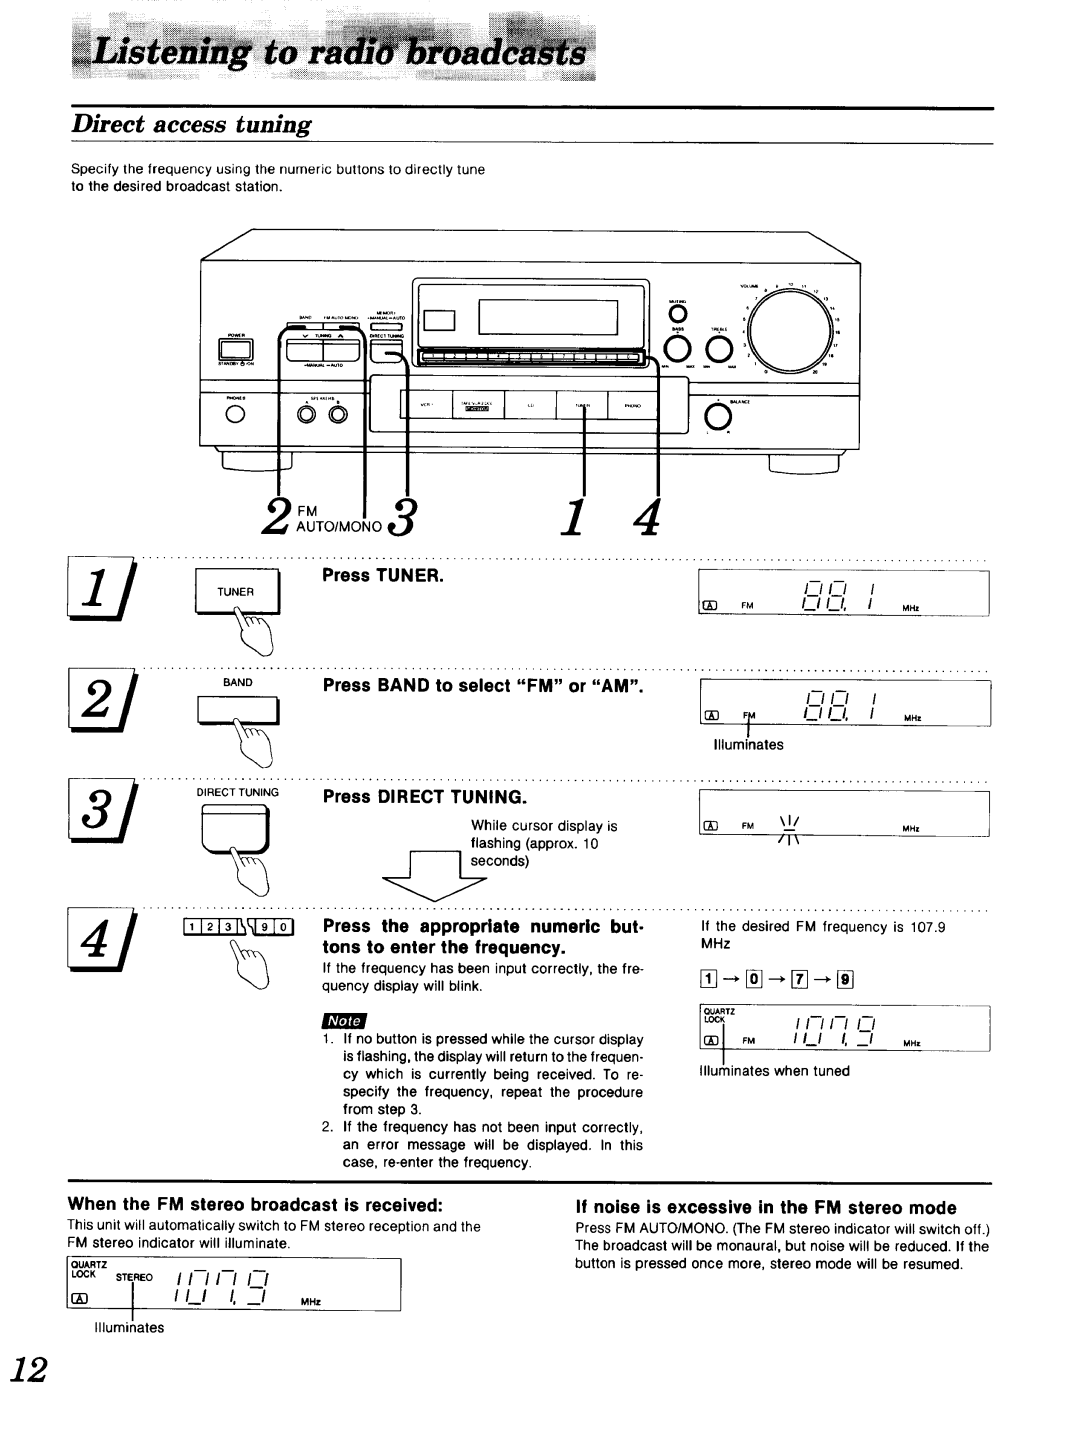 Technics SA-GX 19O manual L J, Direct access tuning, I. 1I. l, Bano J, or AM, I I. 1 I, 1 ..=, Iiii 